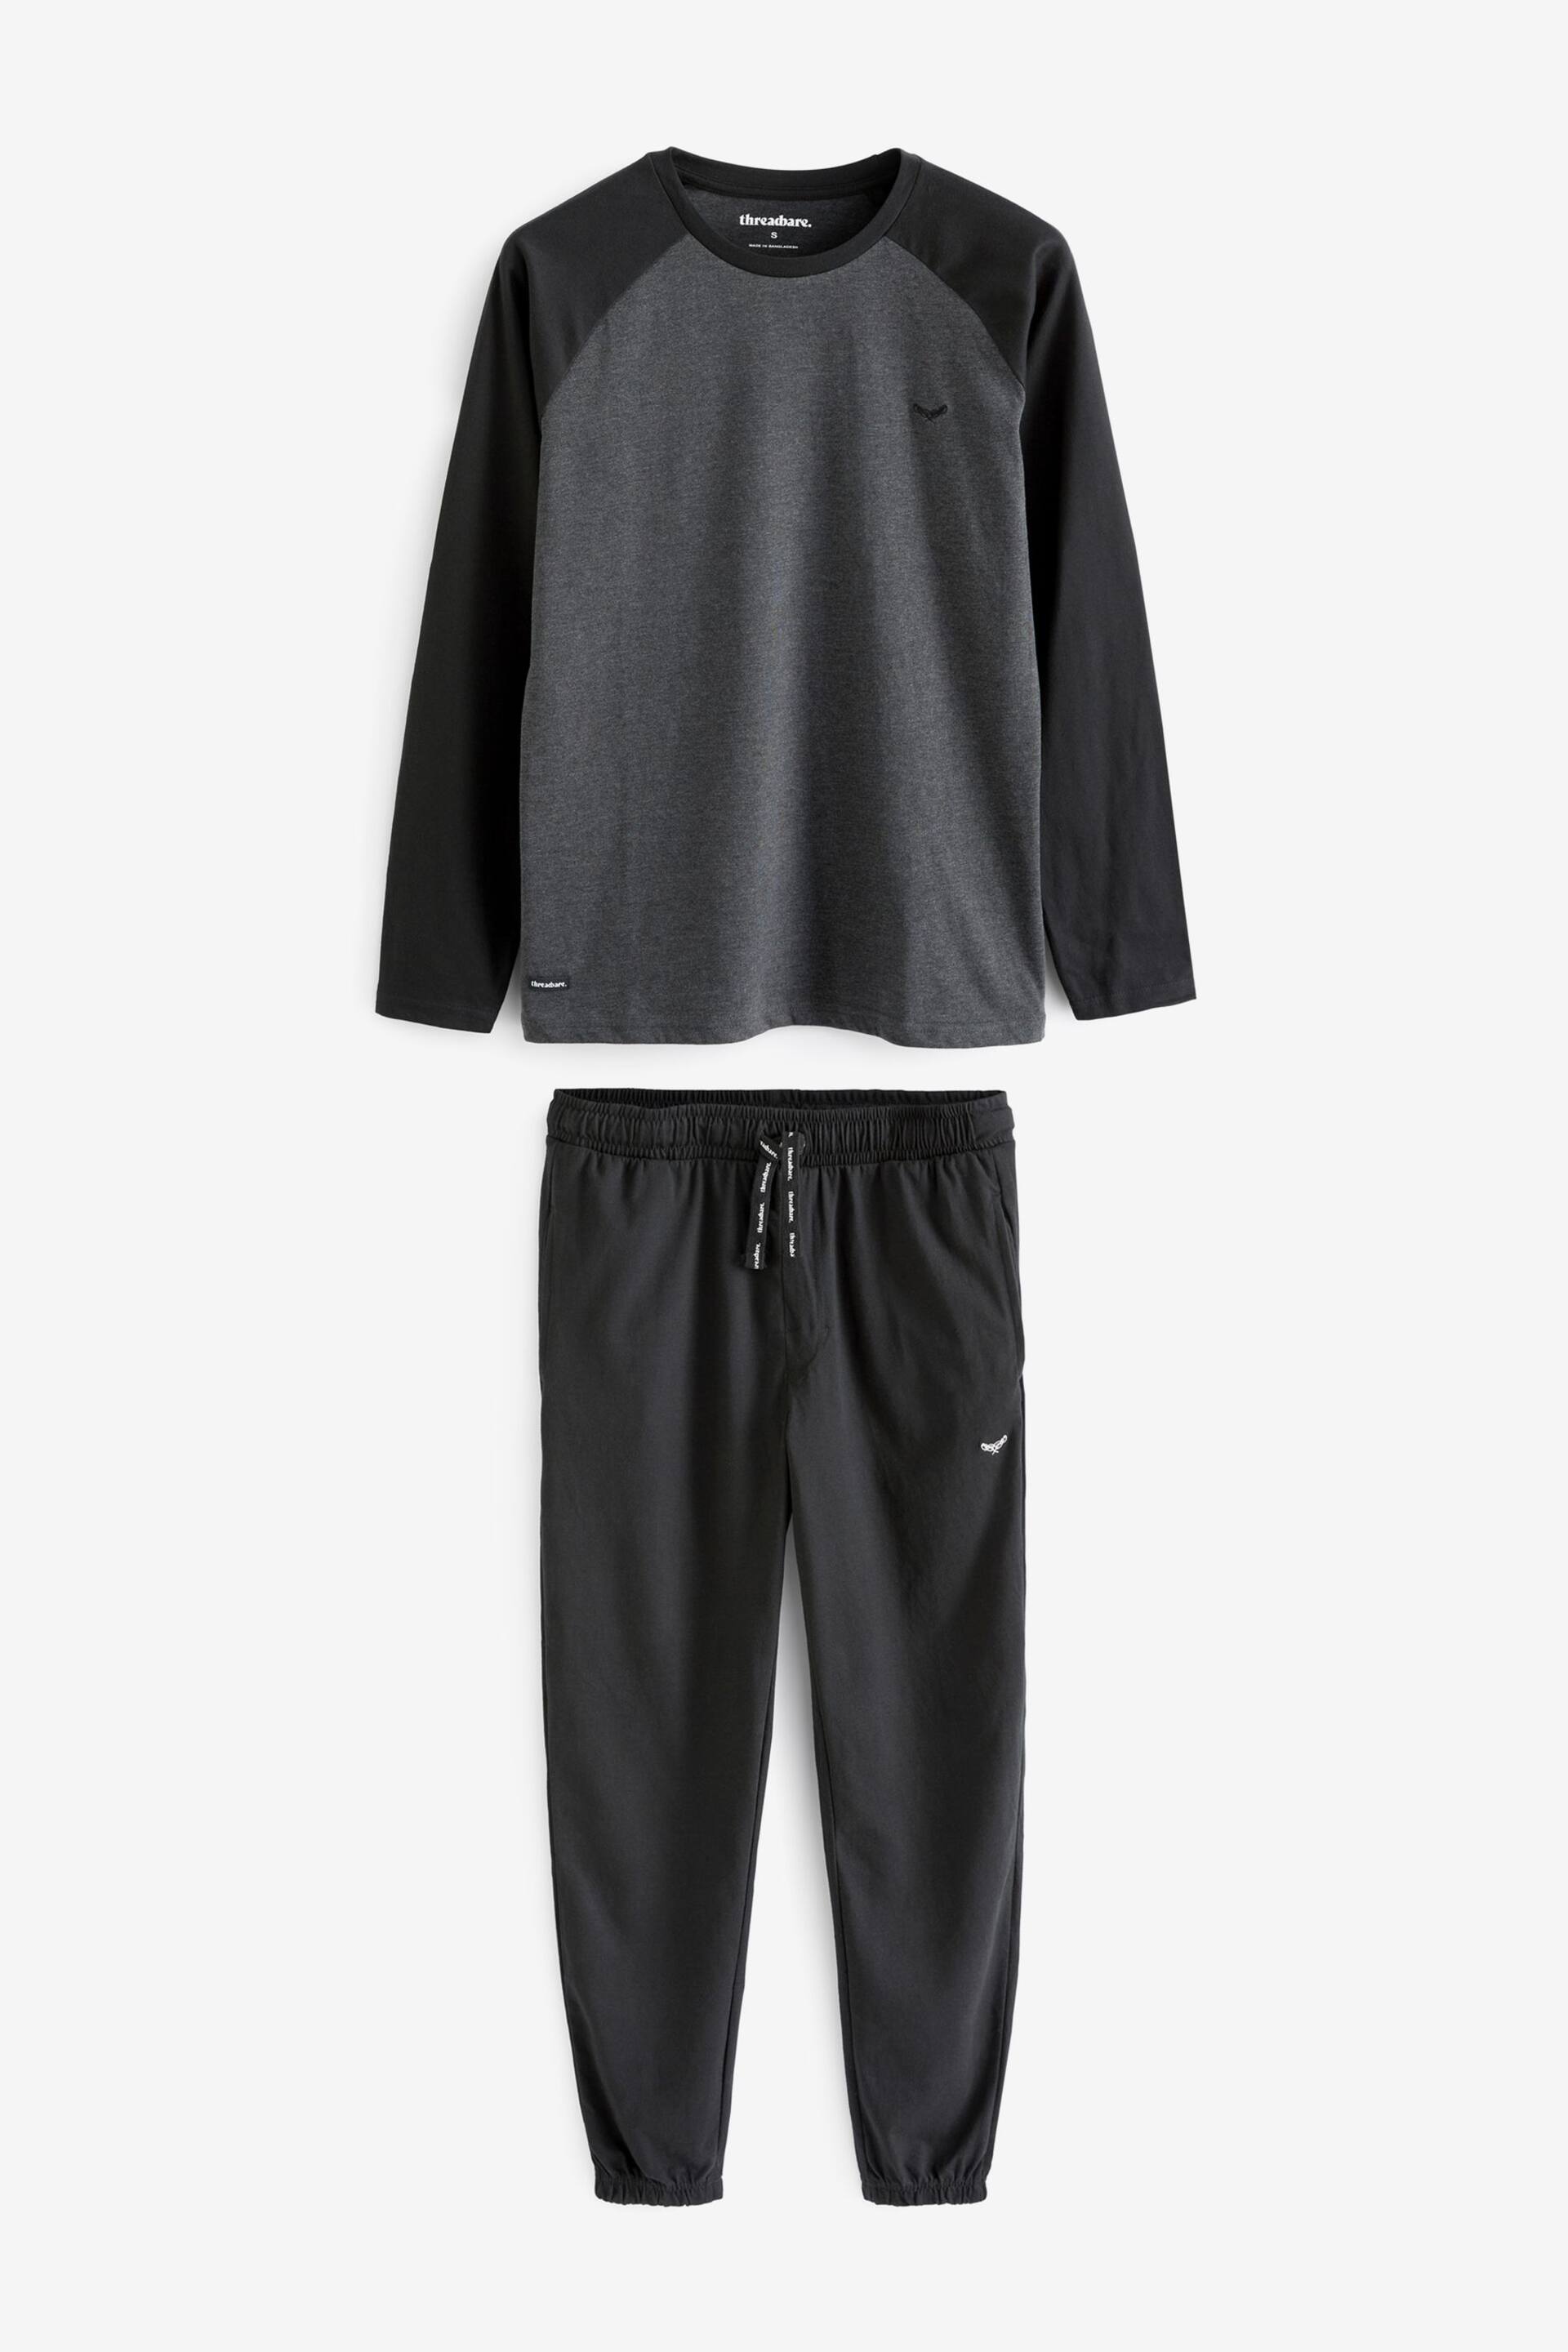 Threadbare Black Cotton Blend Long Sleeve Pyjamas Set - Image 6 of 8